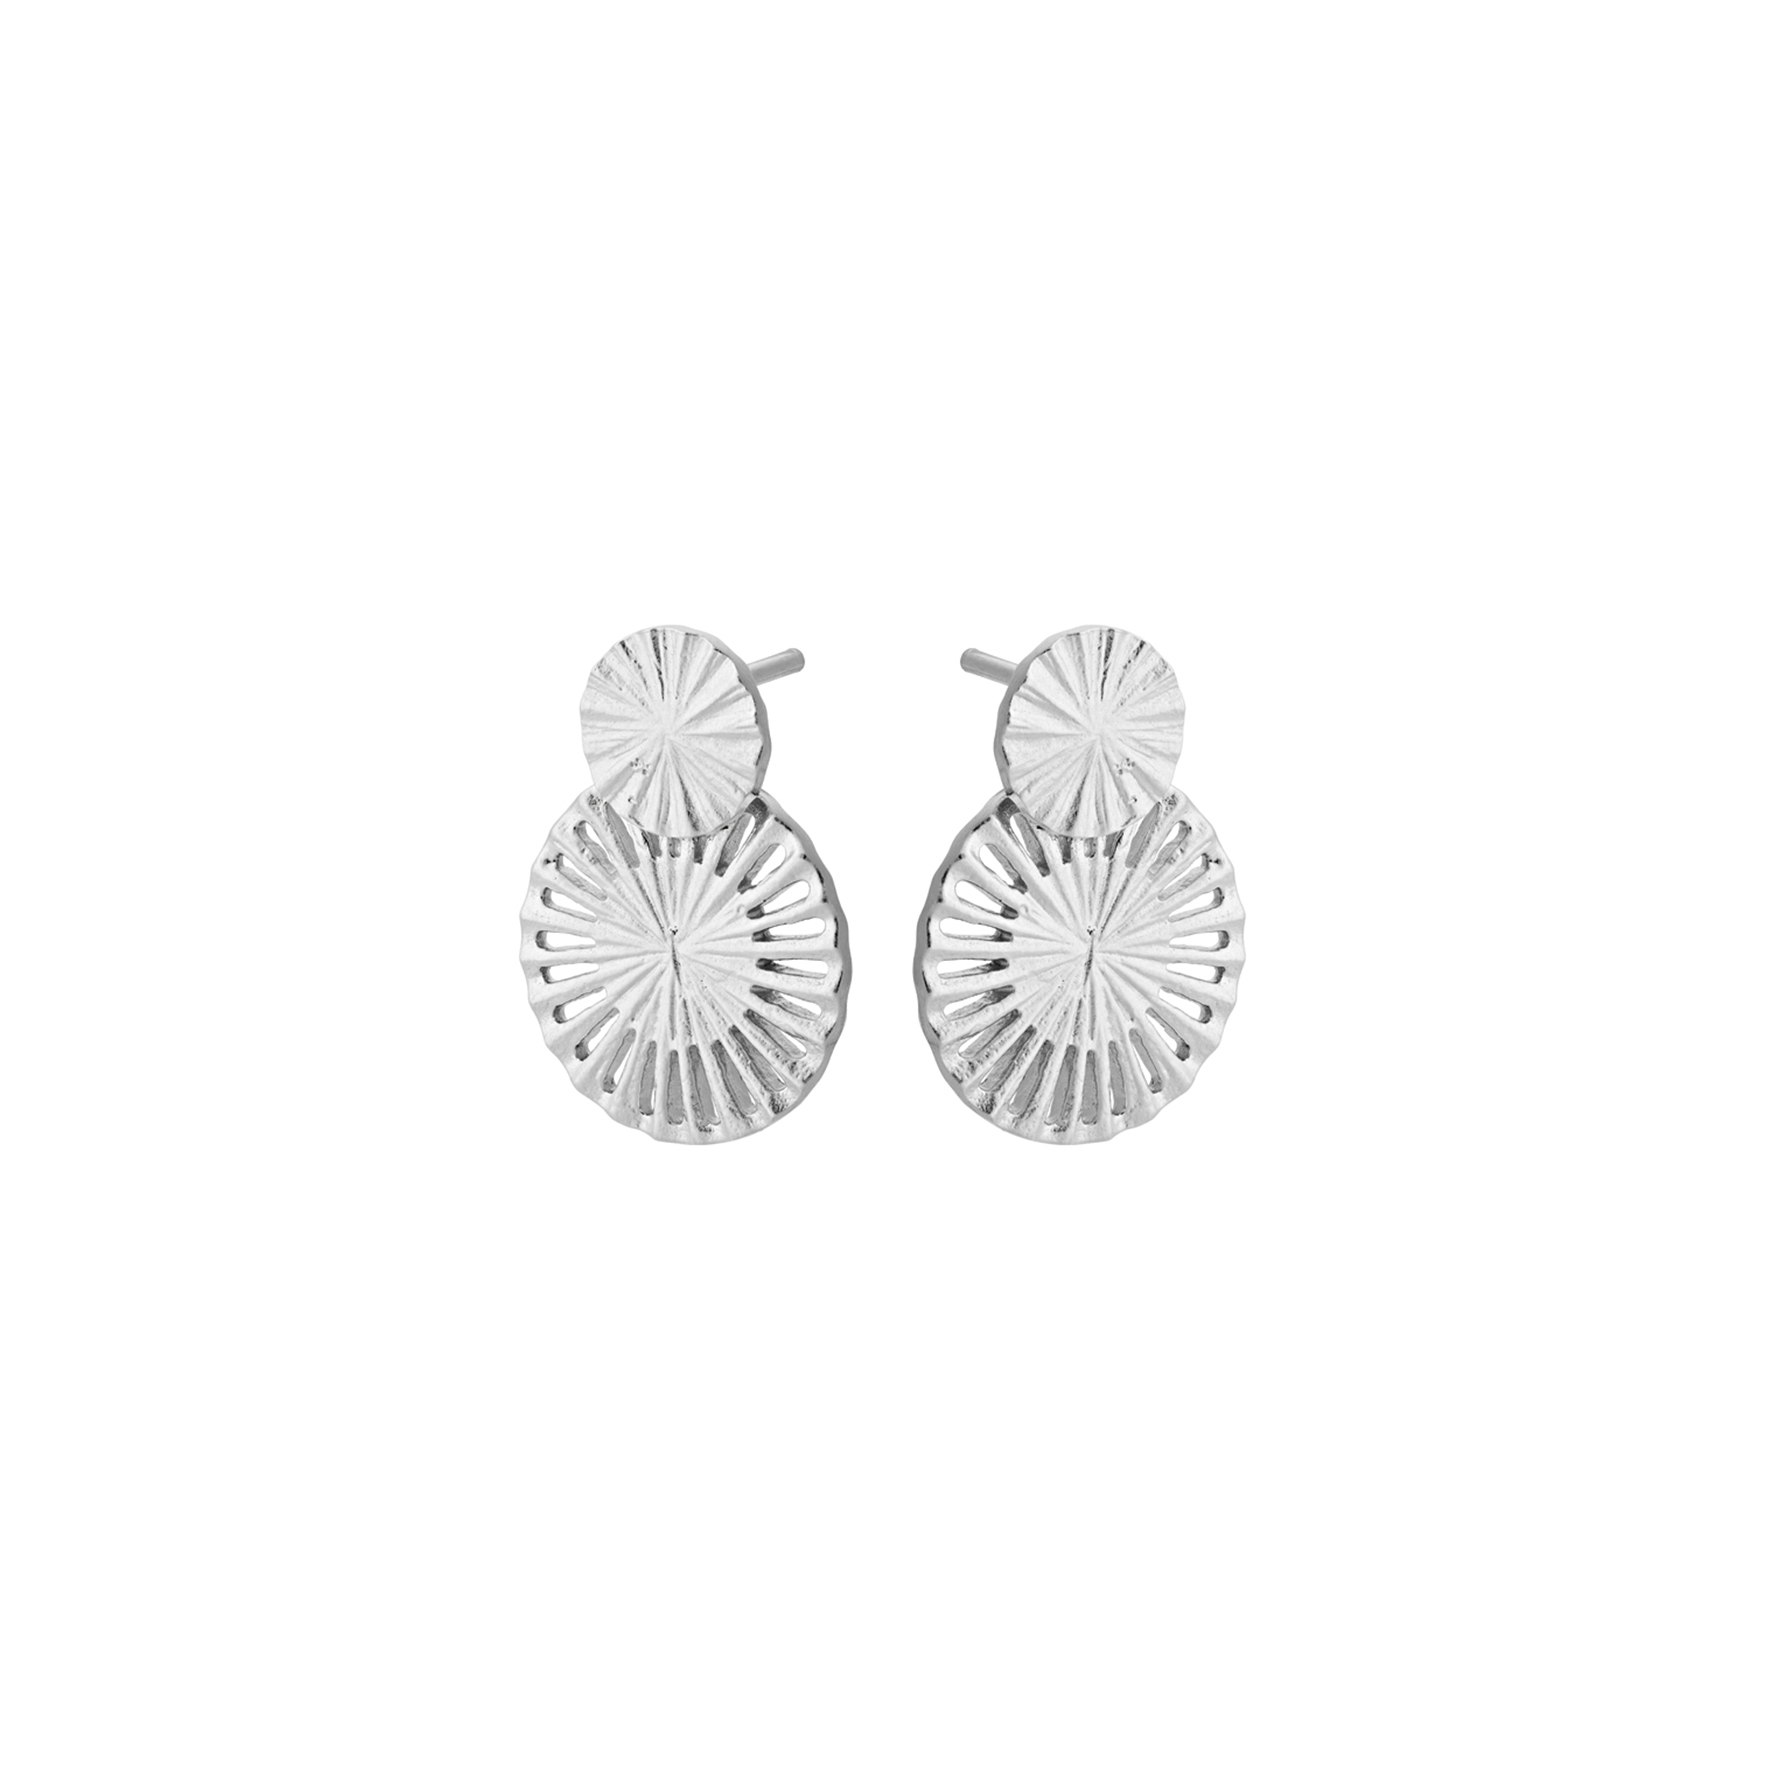 Small Starlight Earrings von Pernille Corydon in Silber Sterling 925